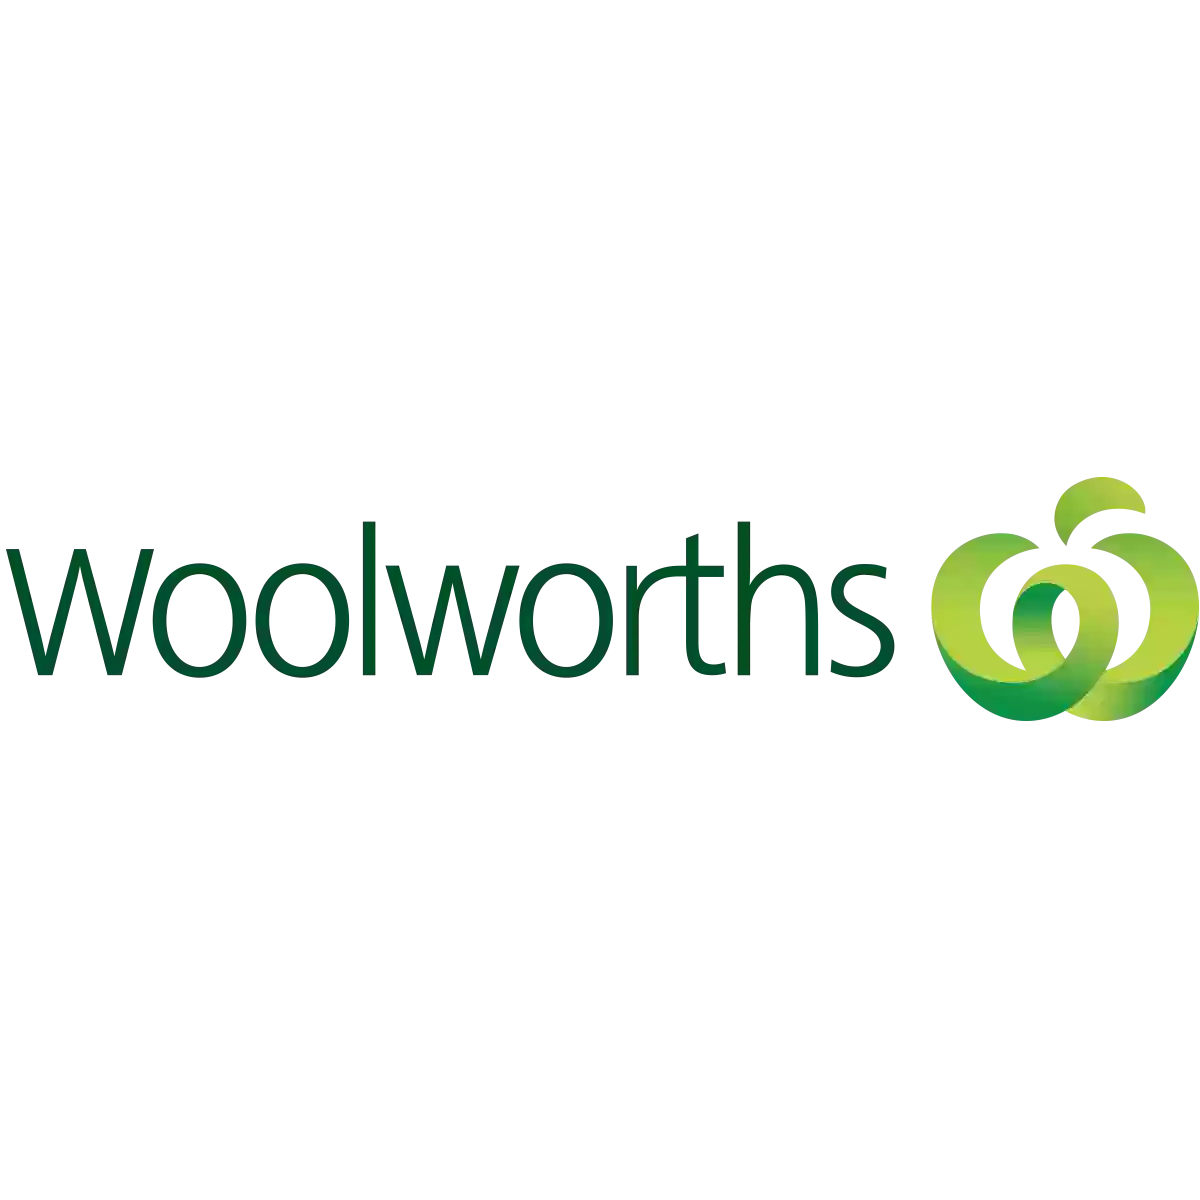 Woolworths Para Hills